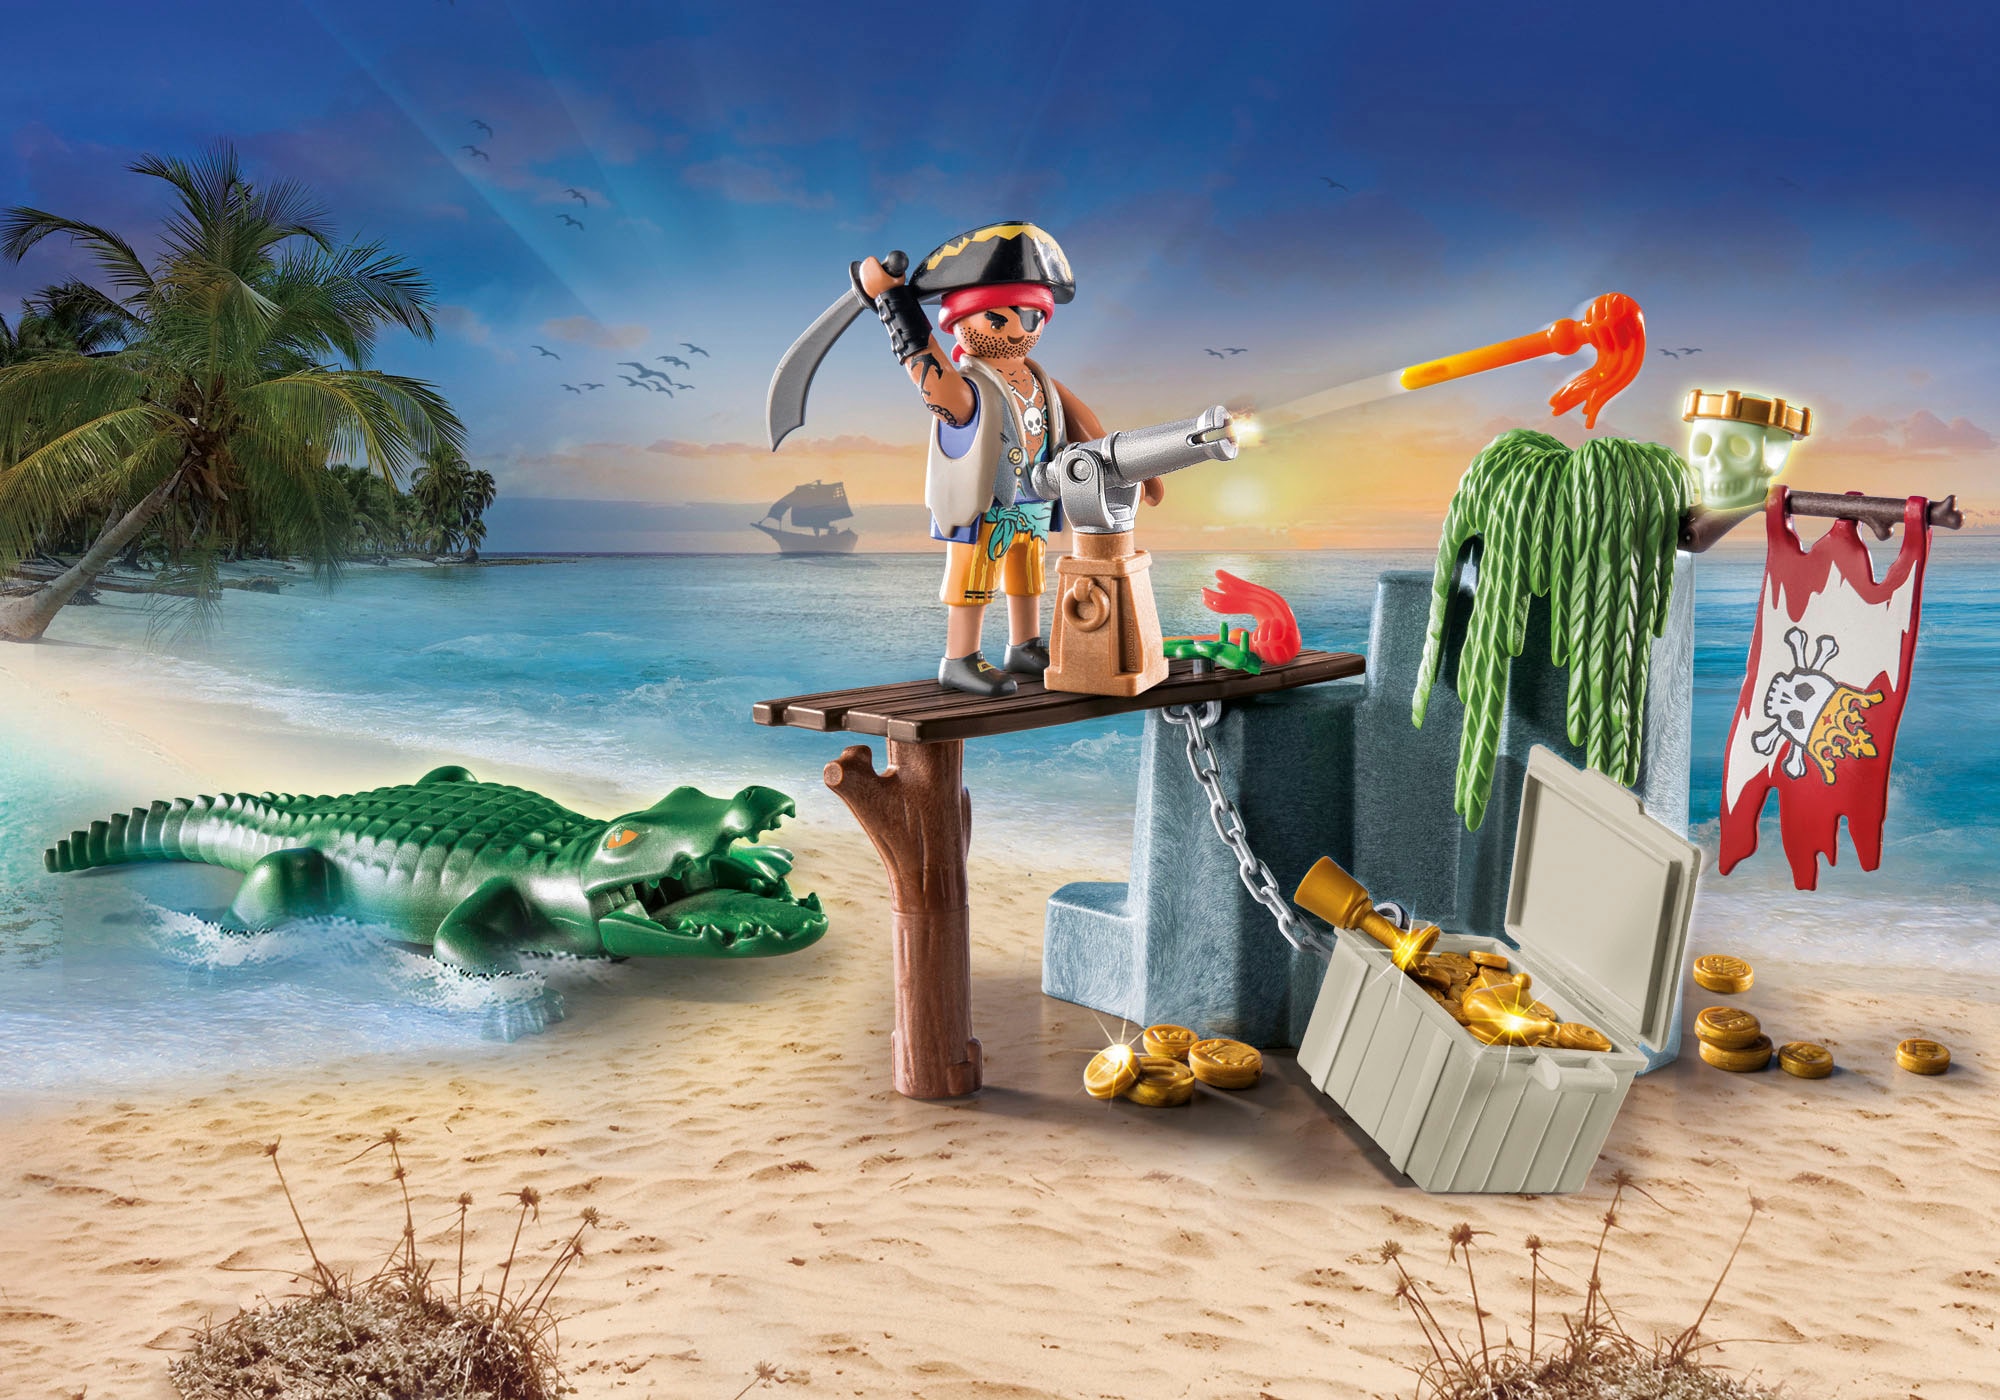 Playmobil® Konstruktions-Spielset »Pirat mit Alligator (71473), Pirates«, (59 St.), teilweise aus recyceltem Material; Made in Europe